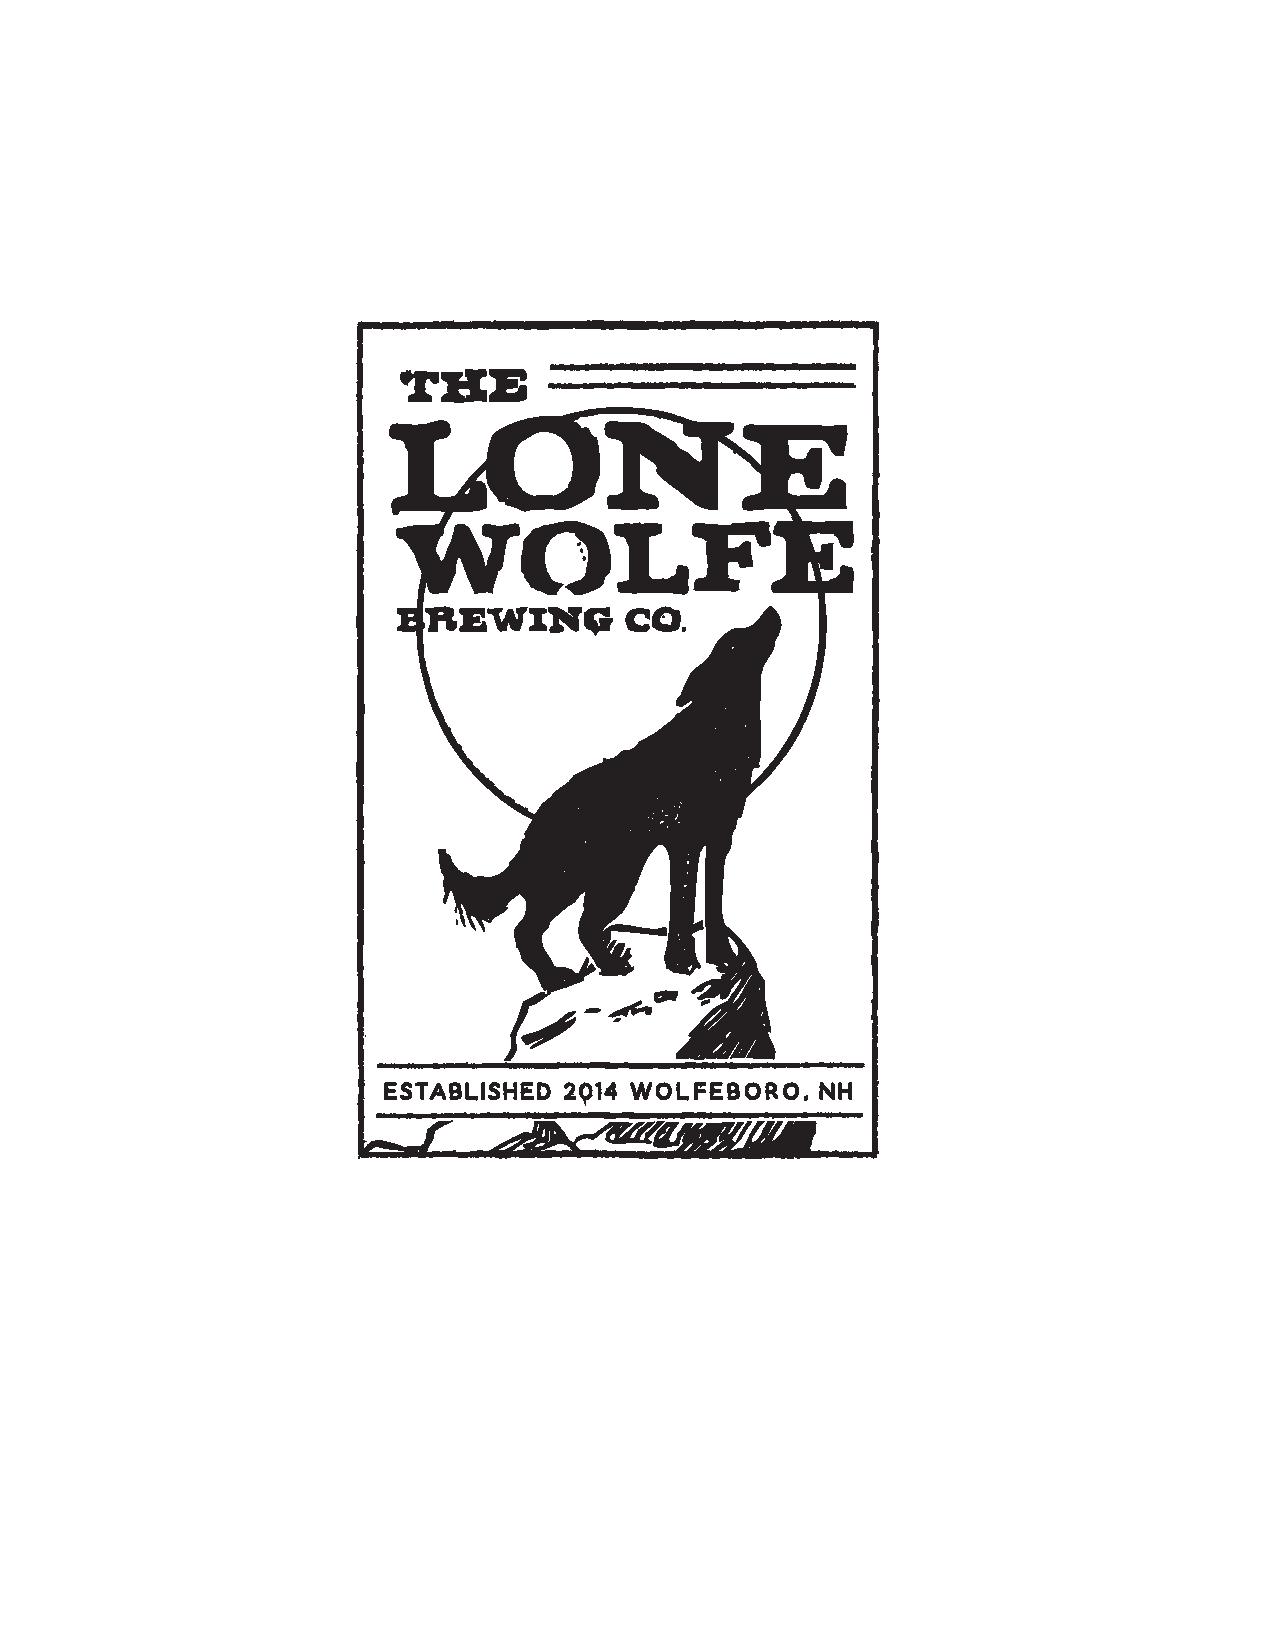 Lone Wolfe Brewing Co.